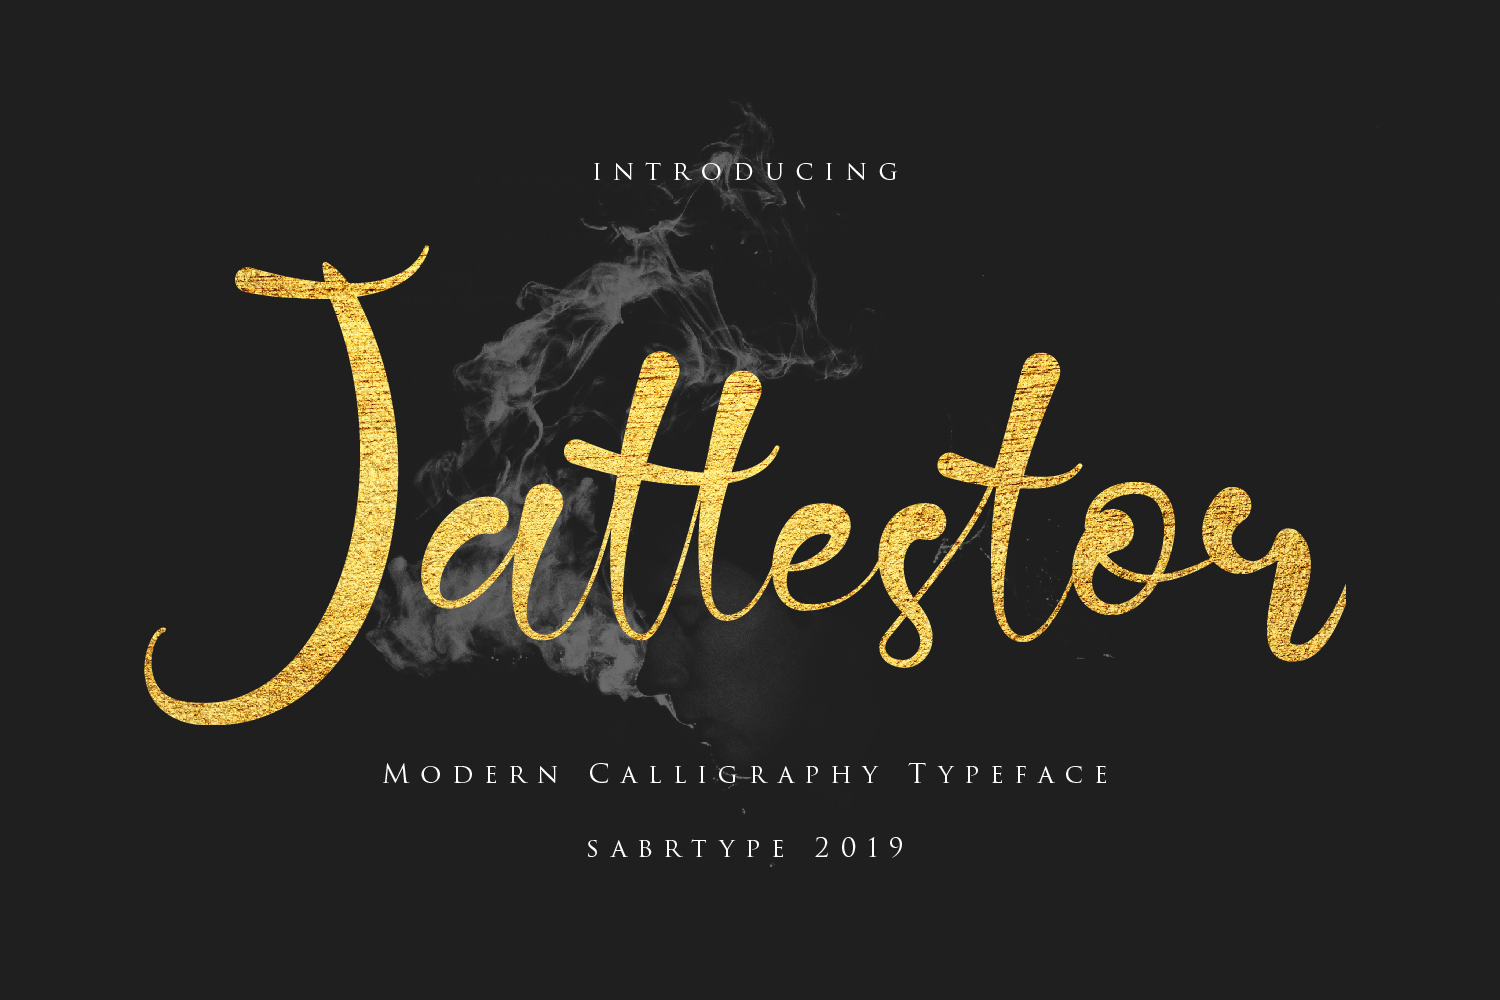 Jattestor calligraphy brush